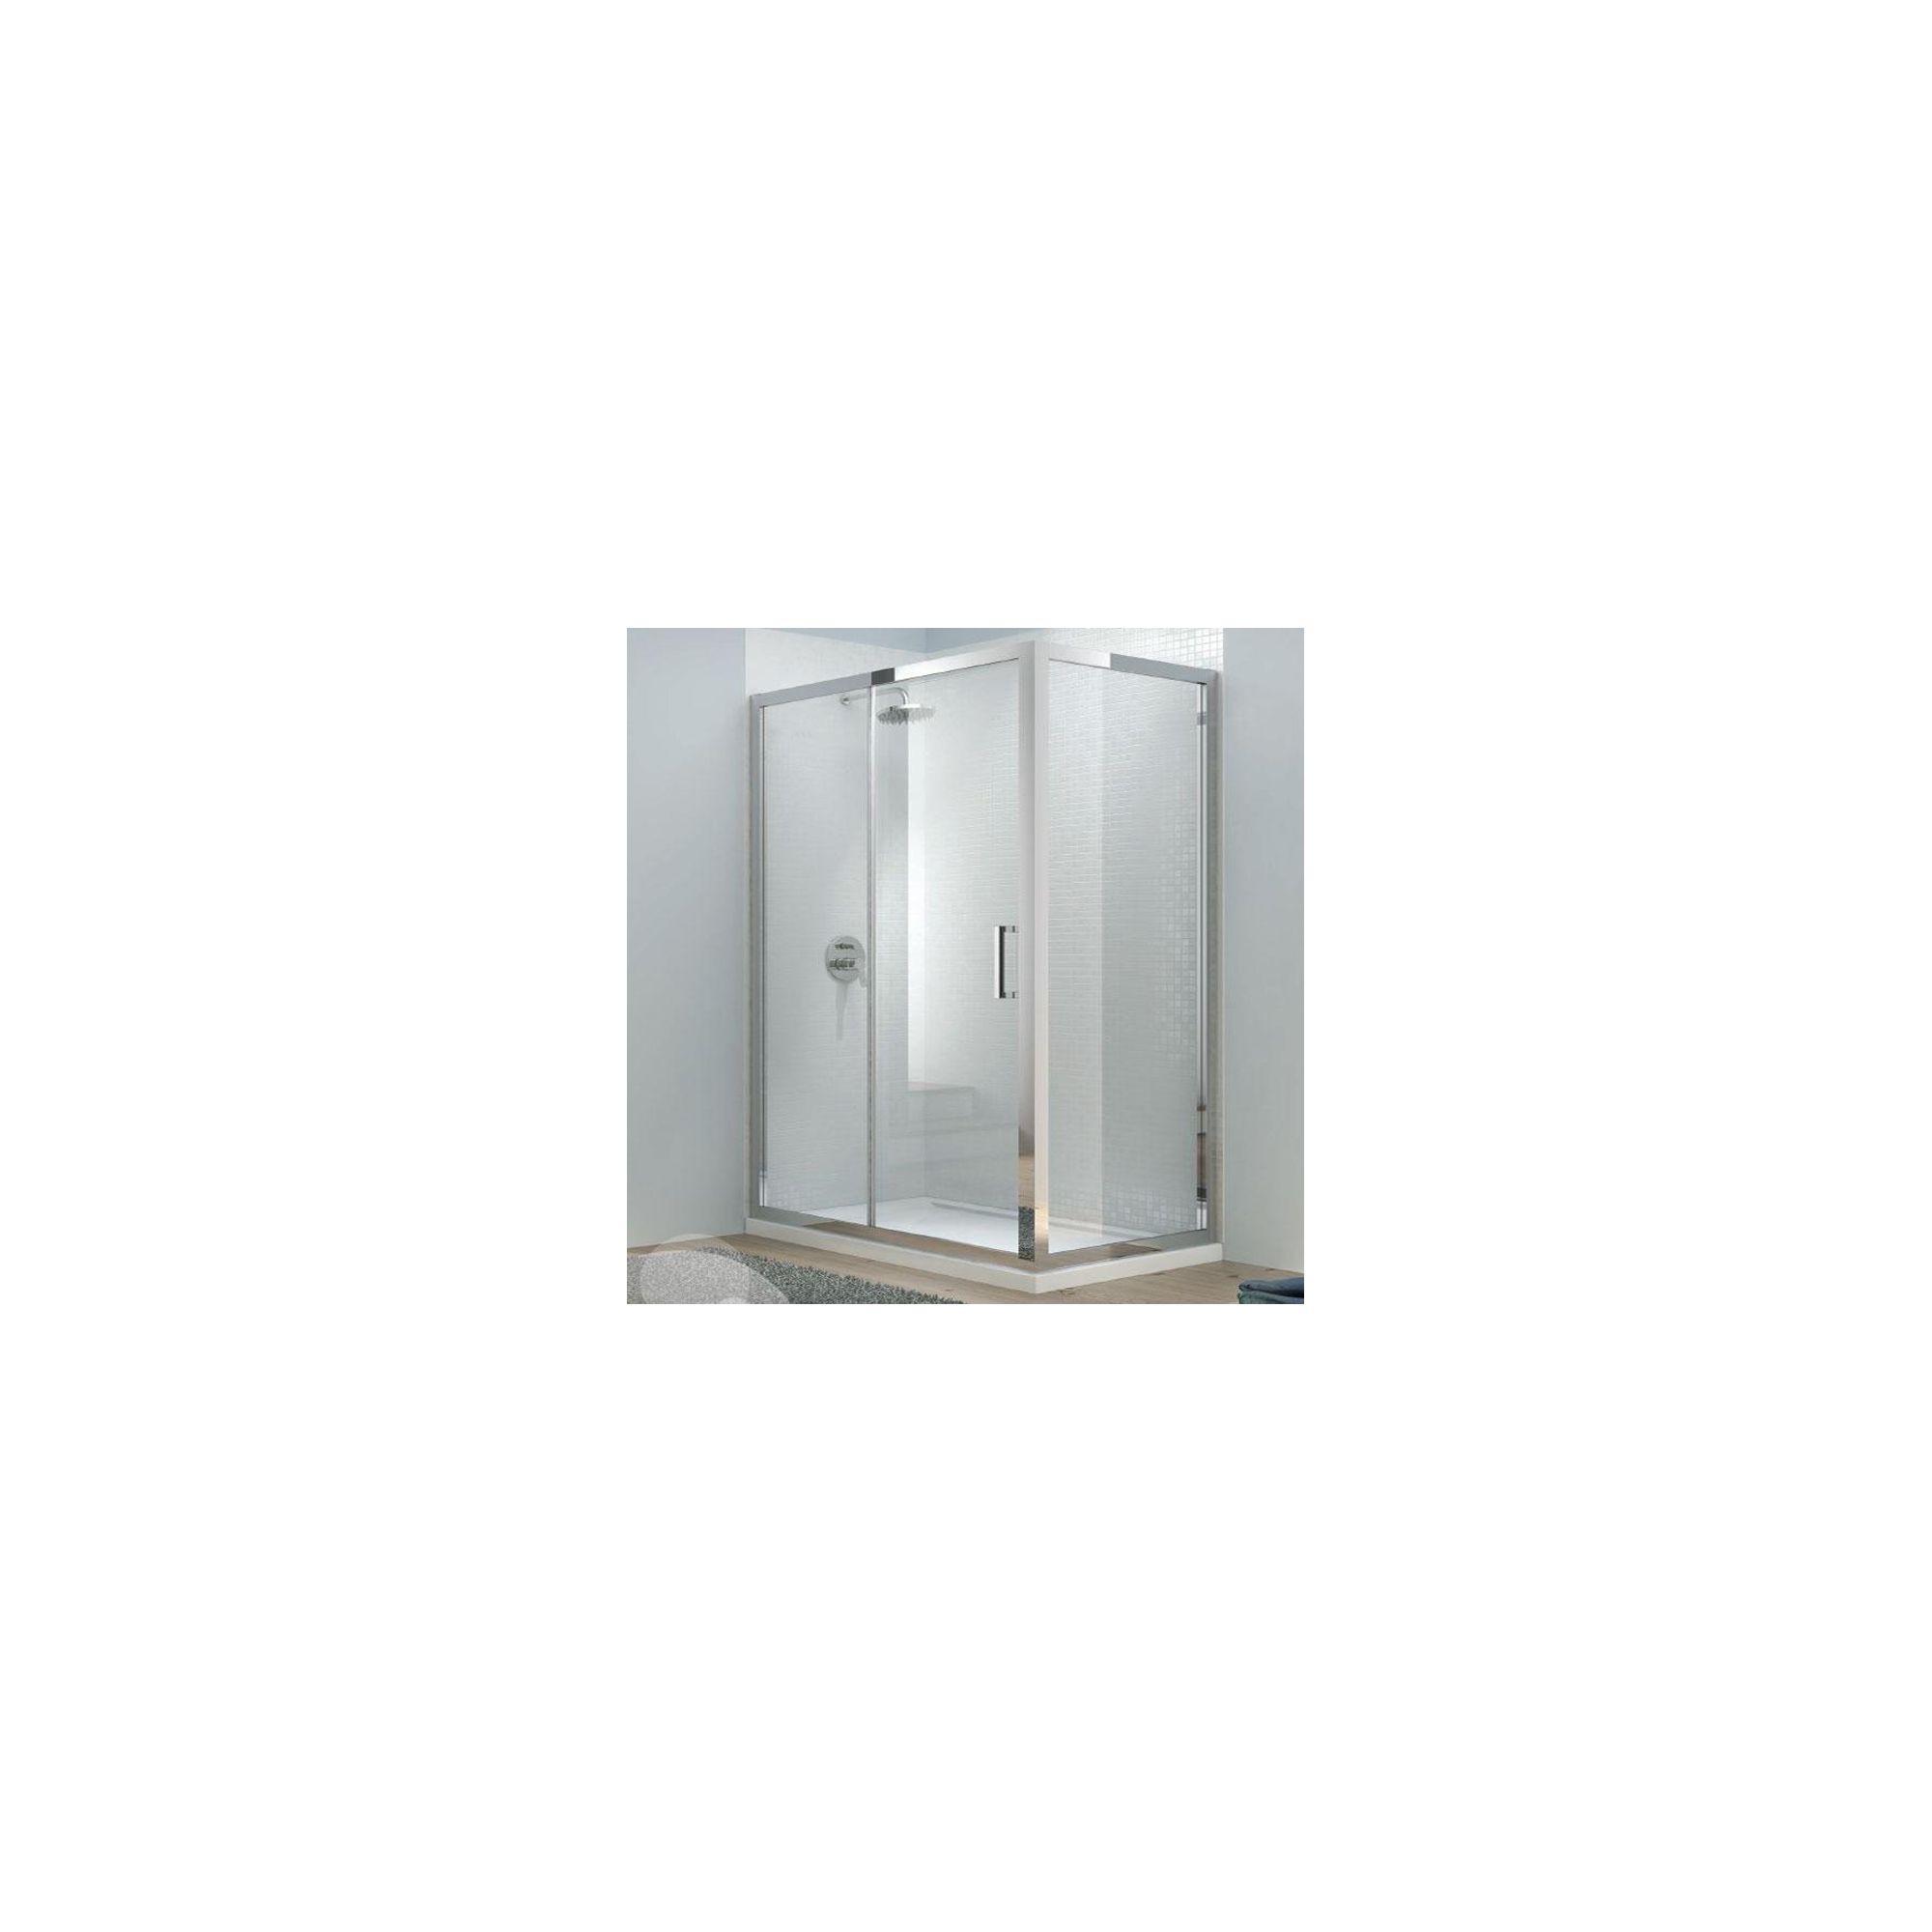 Merlyn Vivid Eight Sliding Shower Door, 1000mm Wide, 8mm Glass at Tesco Direct